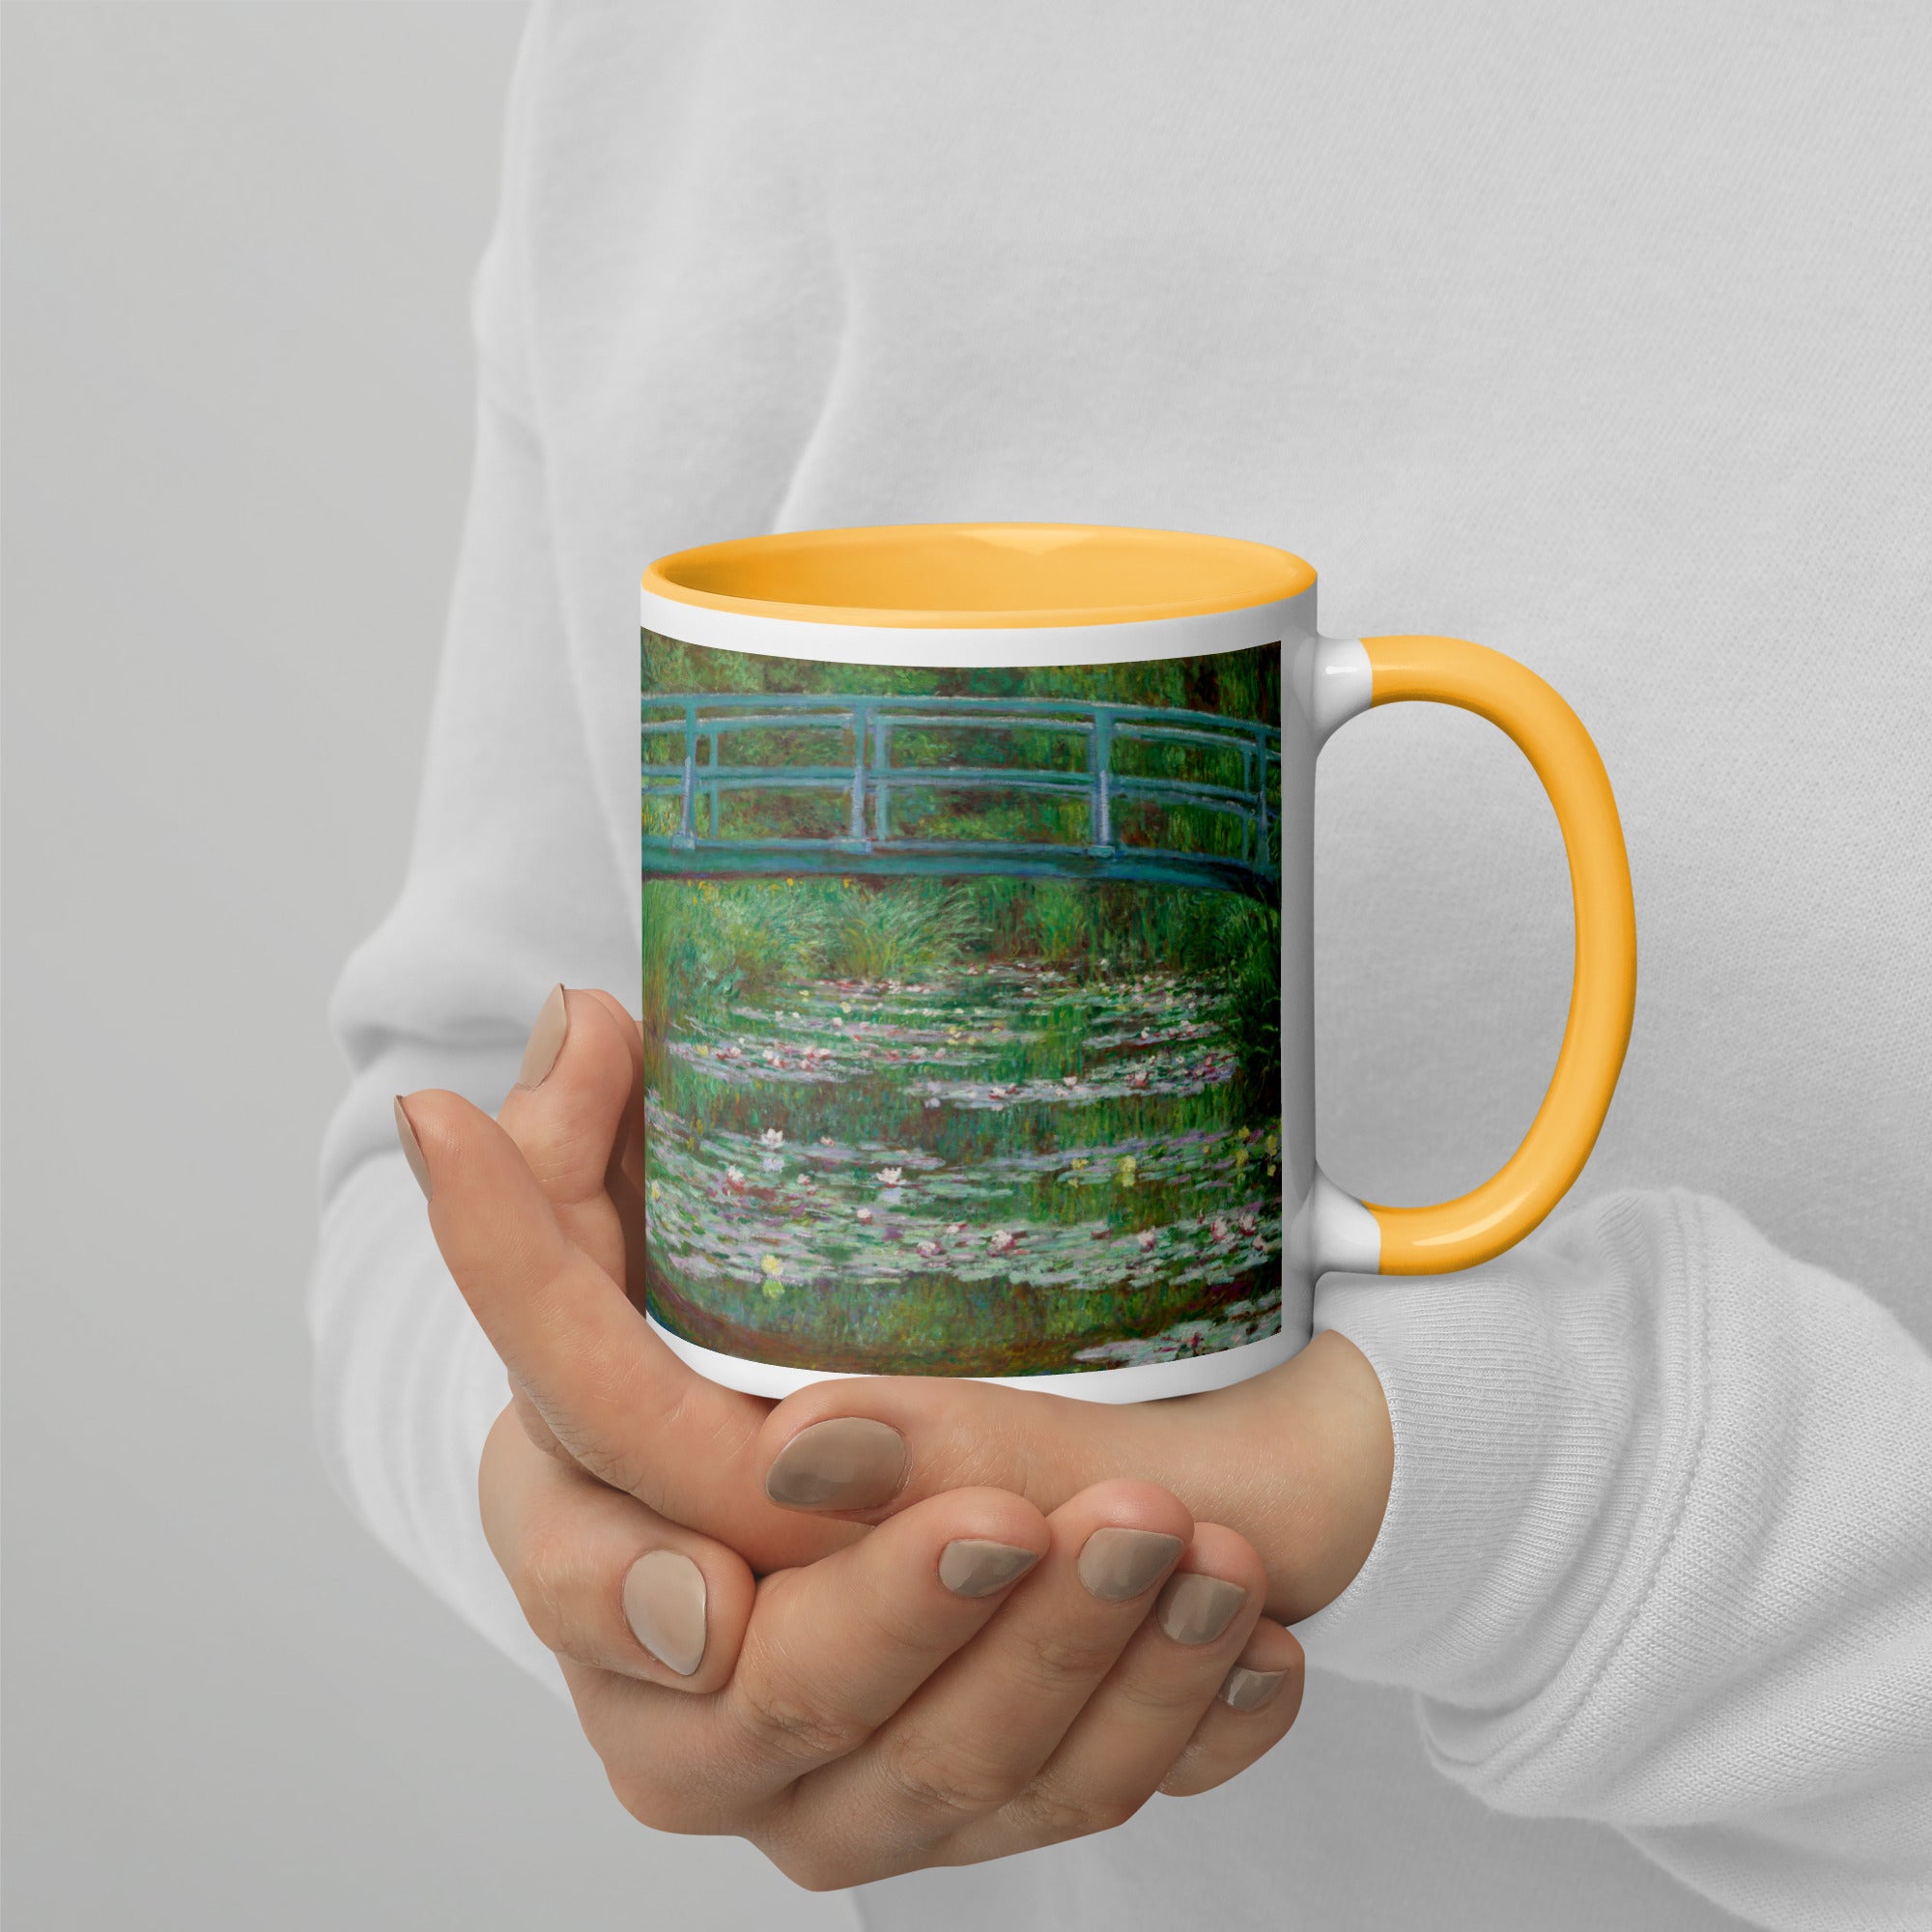 Claude Monet 'The Japanese Footbridge' Famous Painting Ceramic Mug | Premium Art Mug